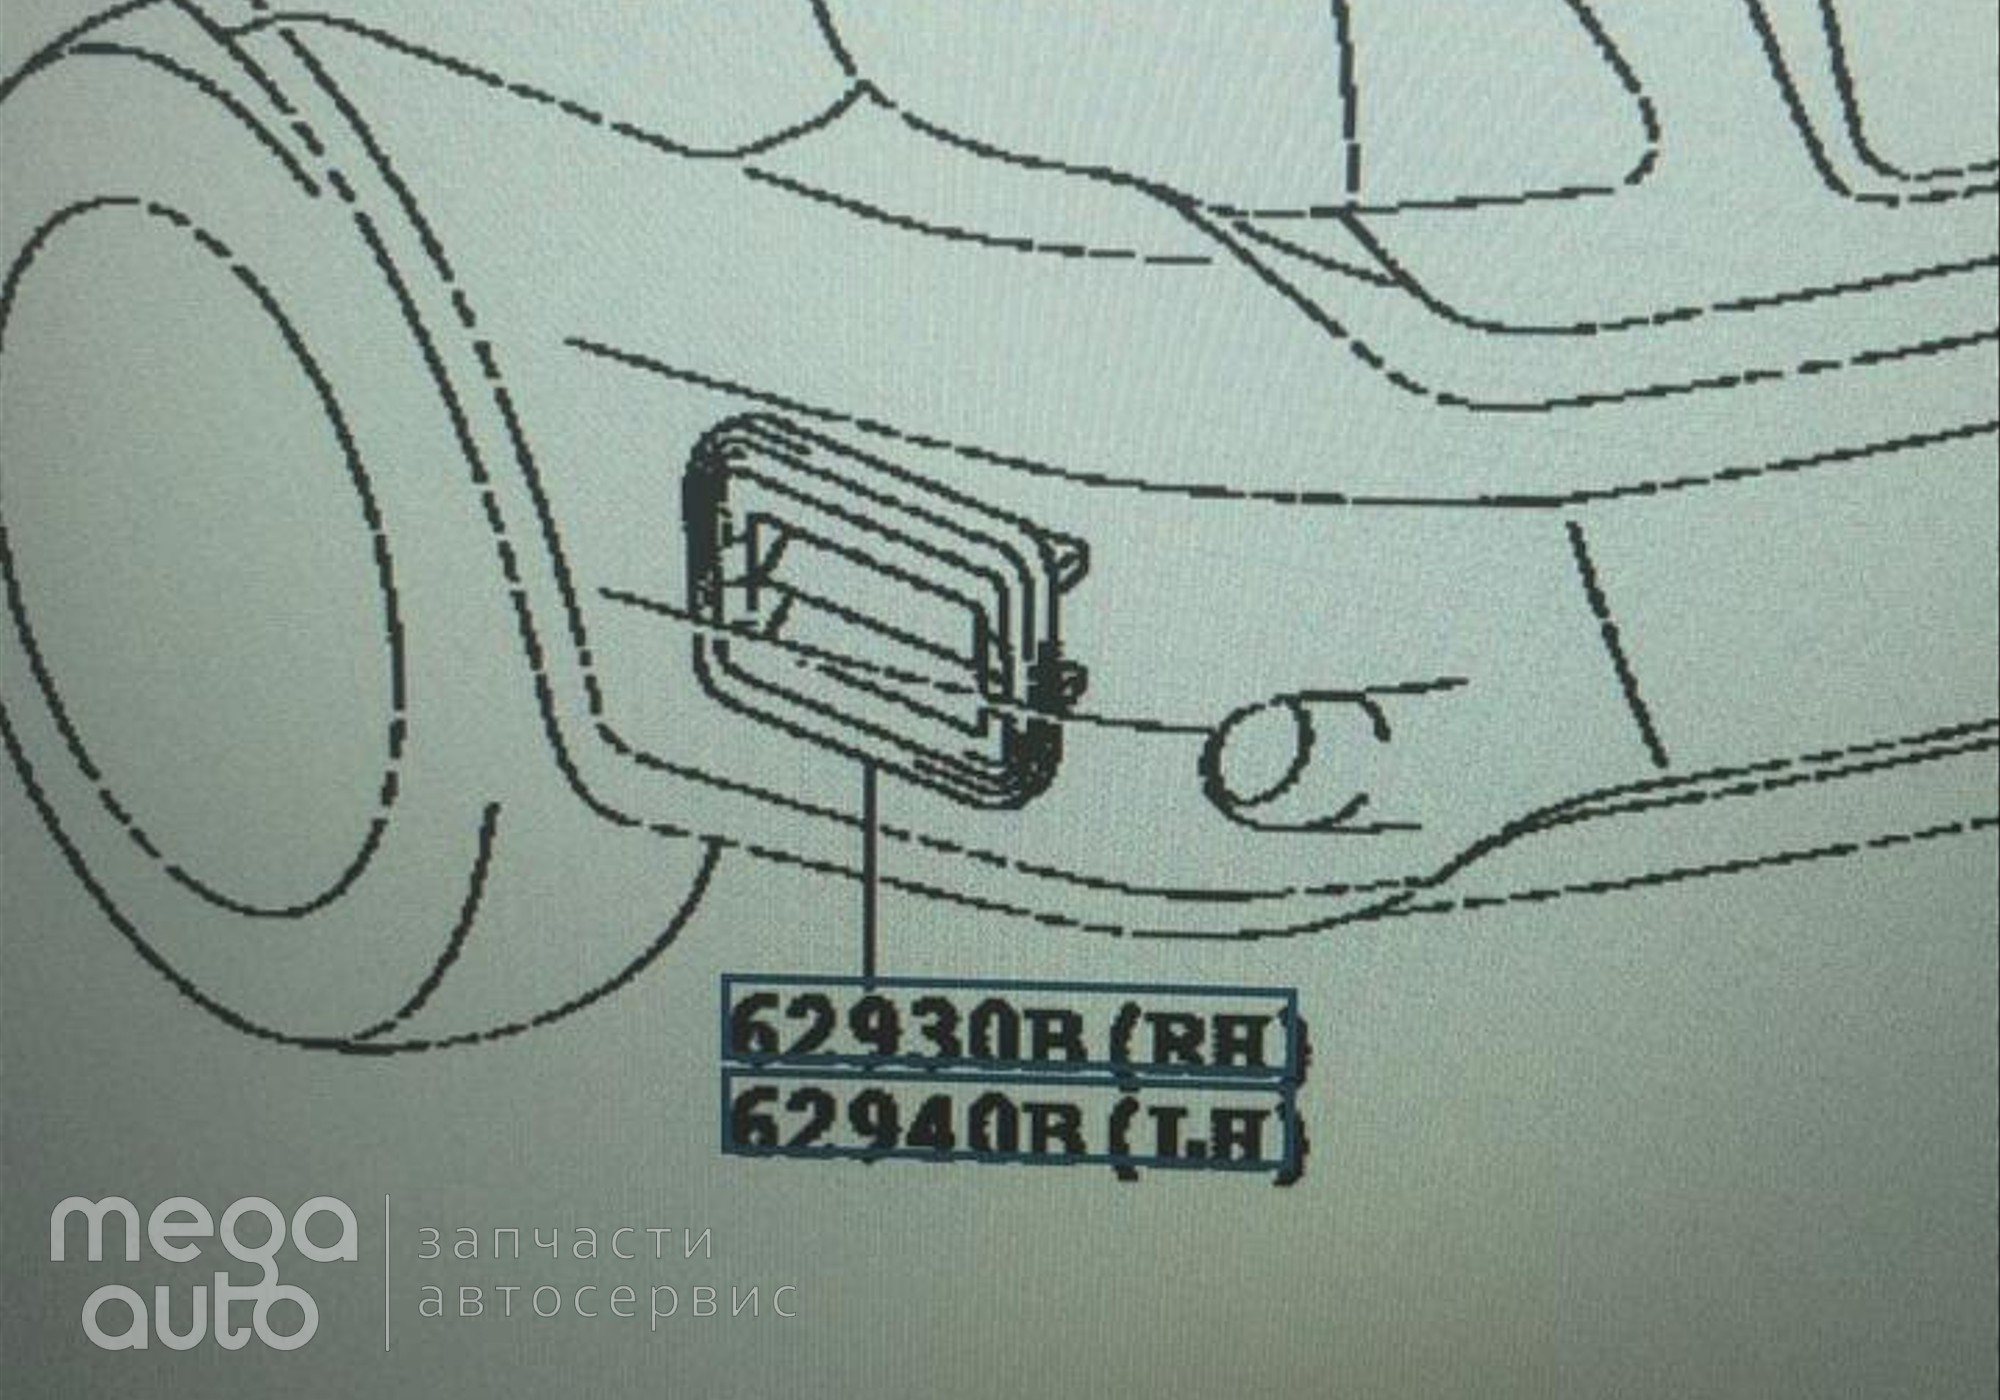 6294033070 решетка вентиляционная правая для Toyota Corolla E140/E150 (с 2007 по 2013)